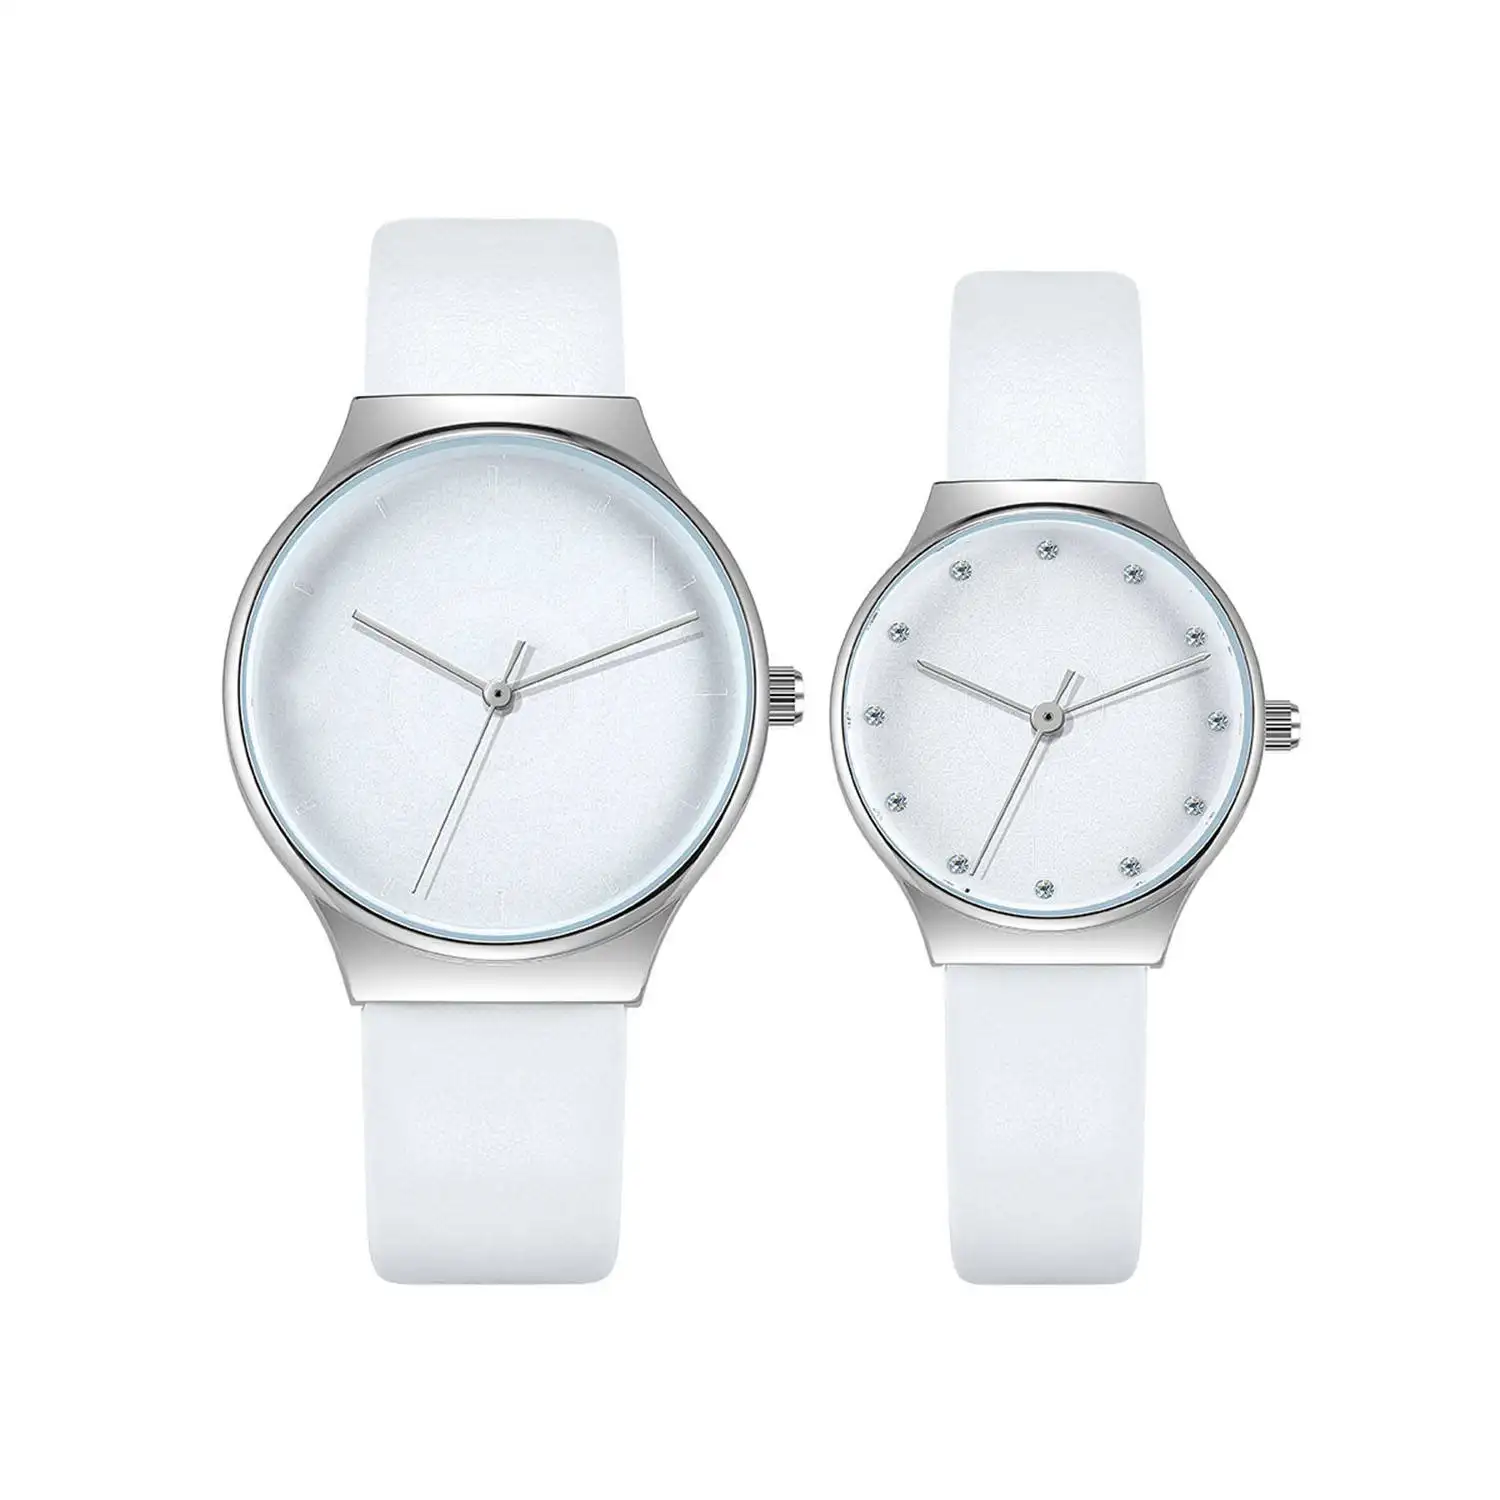 Jam tangan pria sederhana merek mewah jam tangan unik mode Movt impor xxxcom jam tangan pria harga grosir langsung pabrik Shenzhen